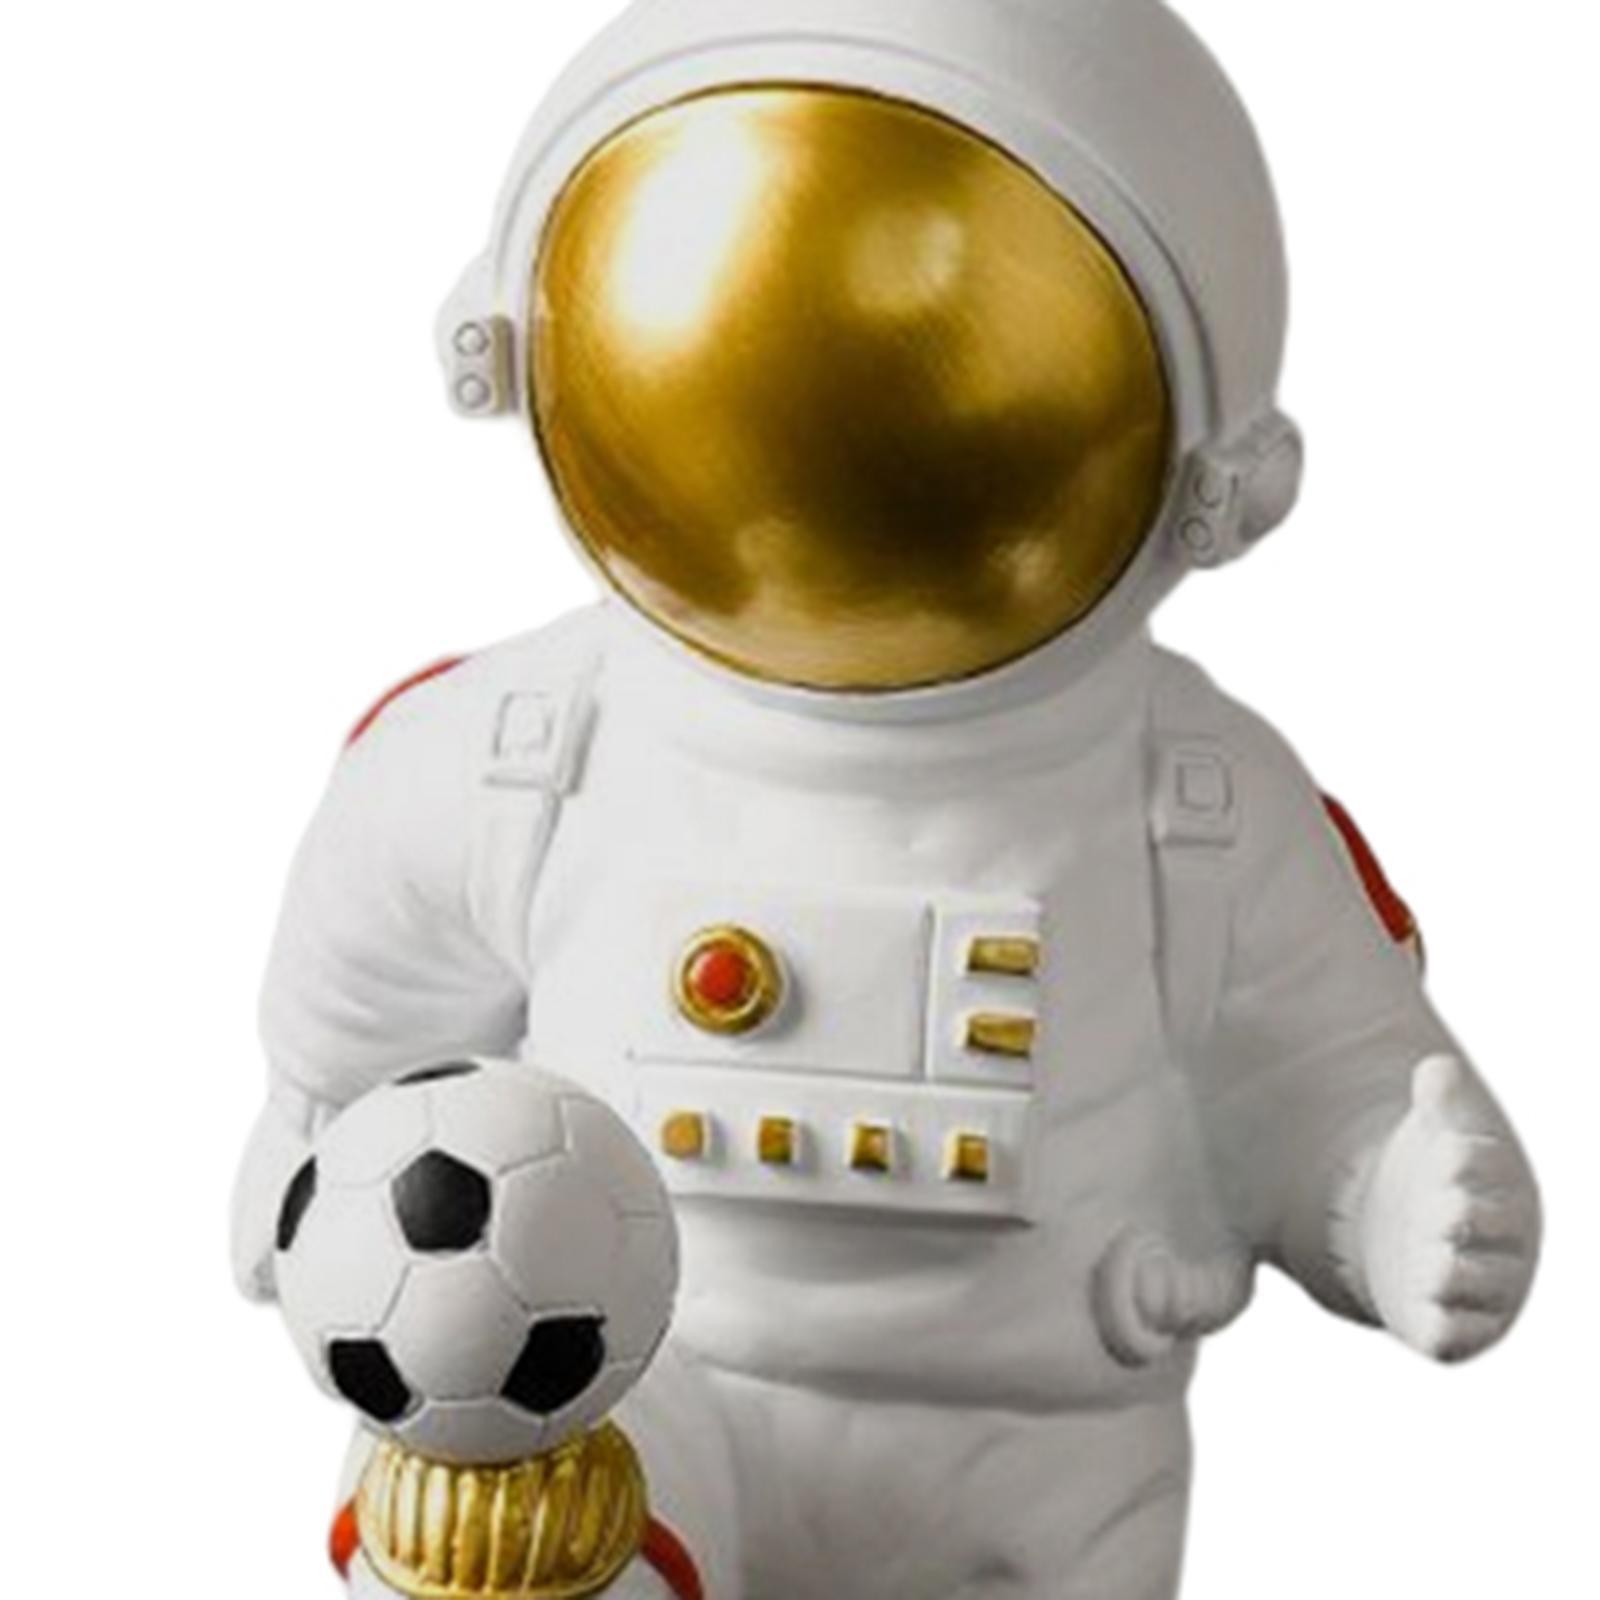 2pcs Astronaut Statue Craft Sculpture Ornament Gift Home Decor Bookshelf